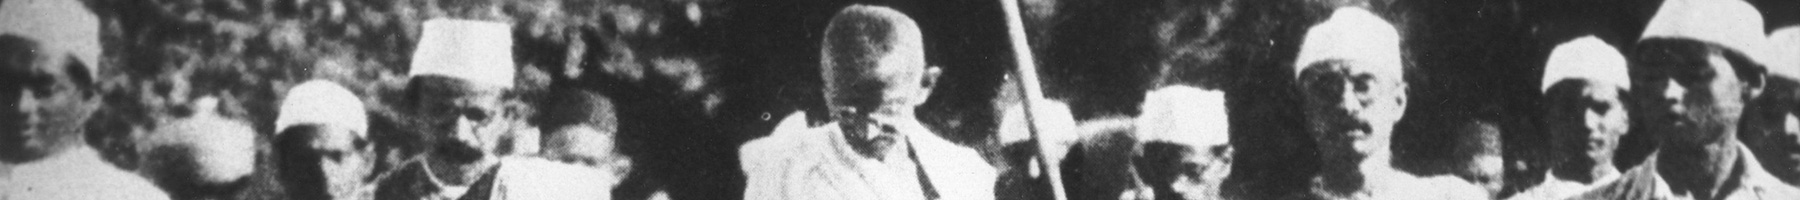 Gandhi during the Salt March, March 1930.